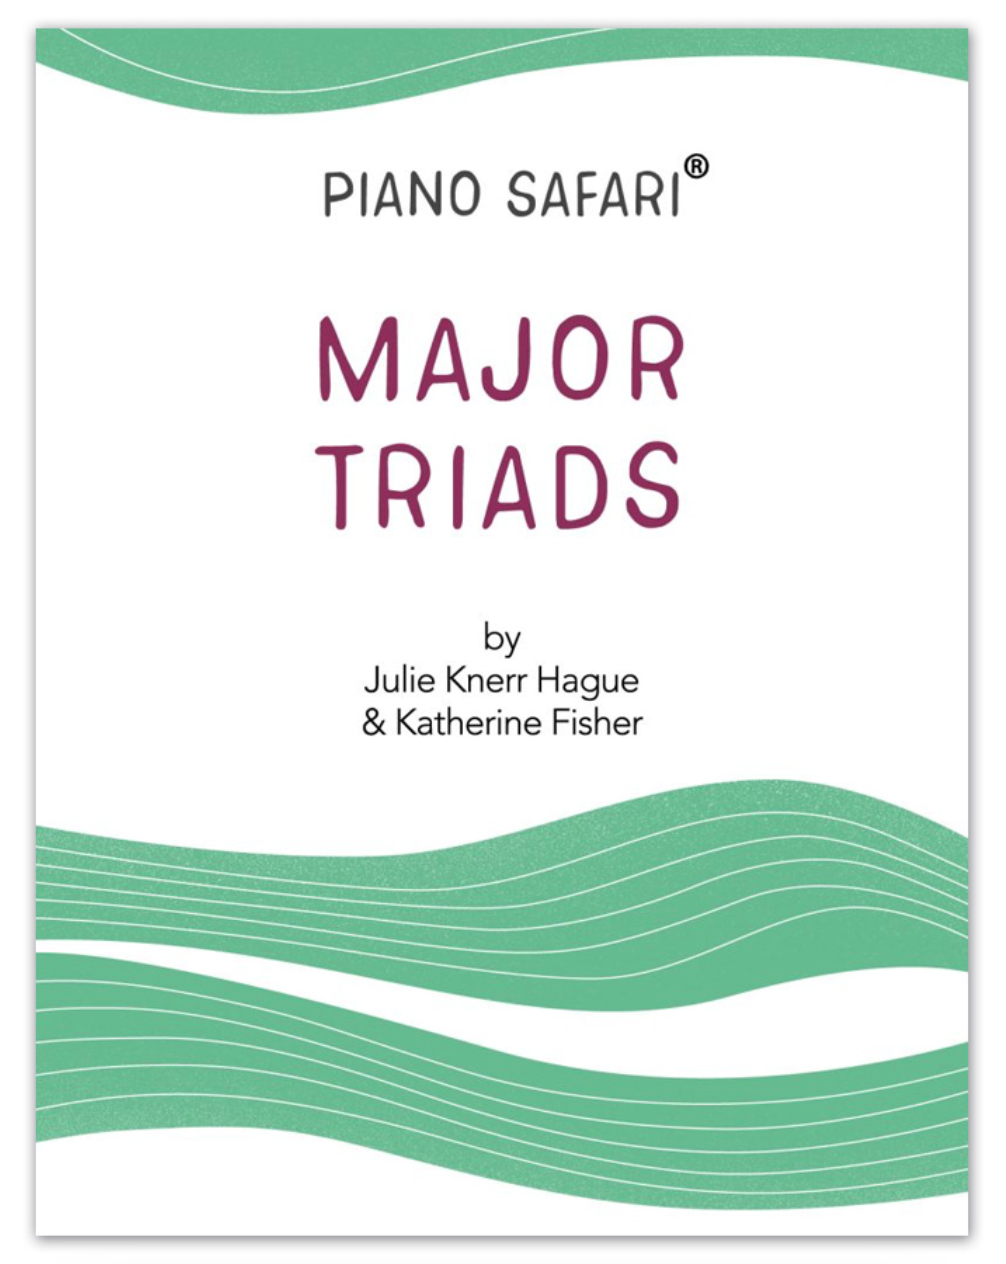 Piano Safari Major Triads Cards - Fisher Katherine; Hague Julie Knerr Piano Safari PNSF1045